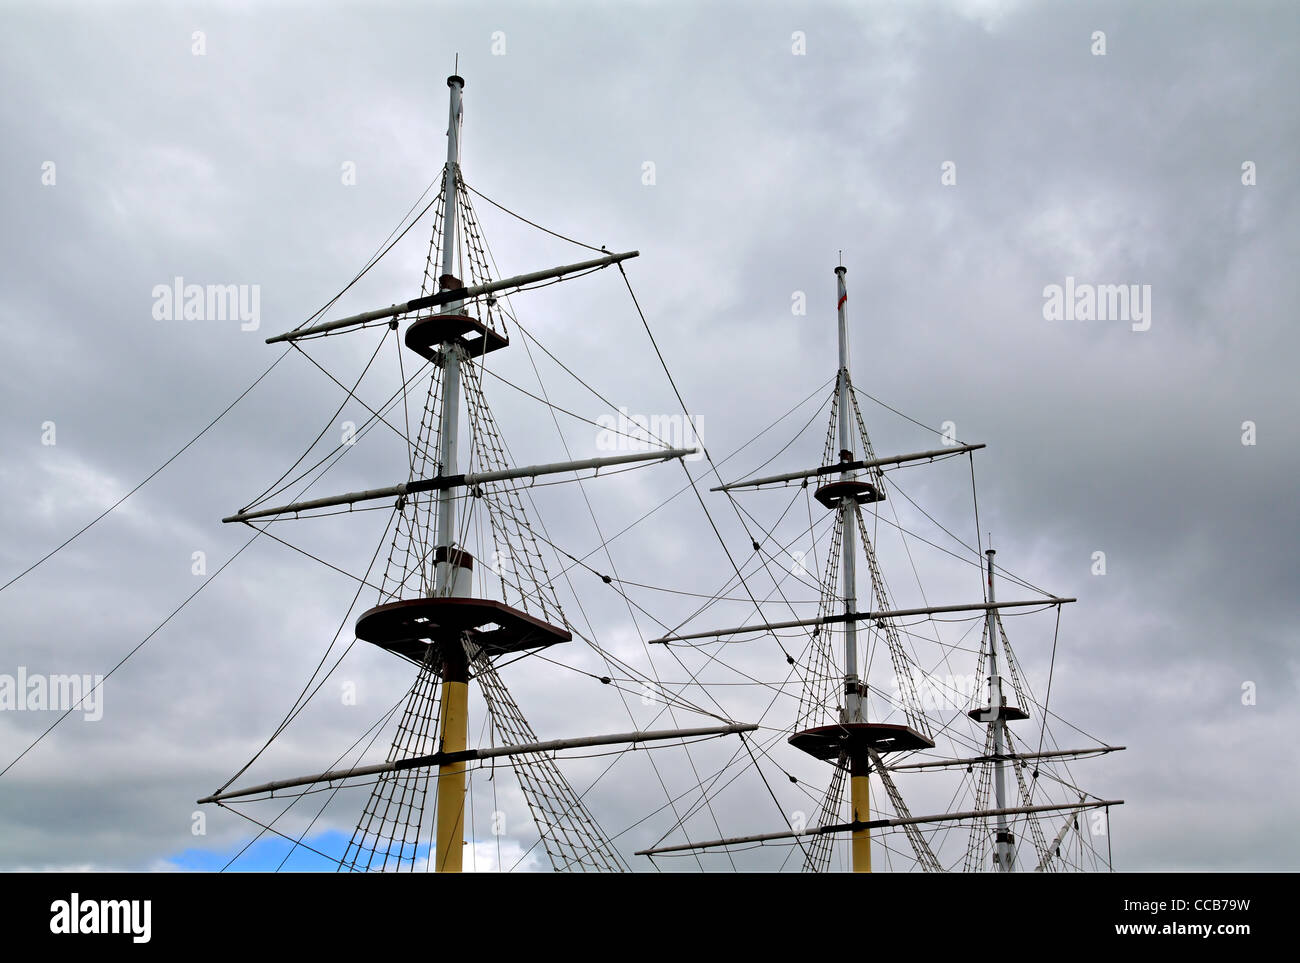 ship masts on cloudy sky Stock Photo